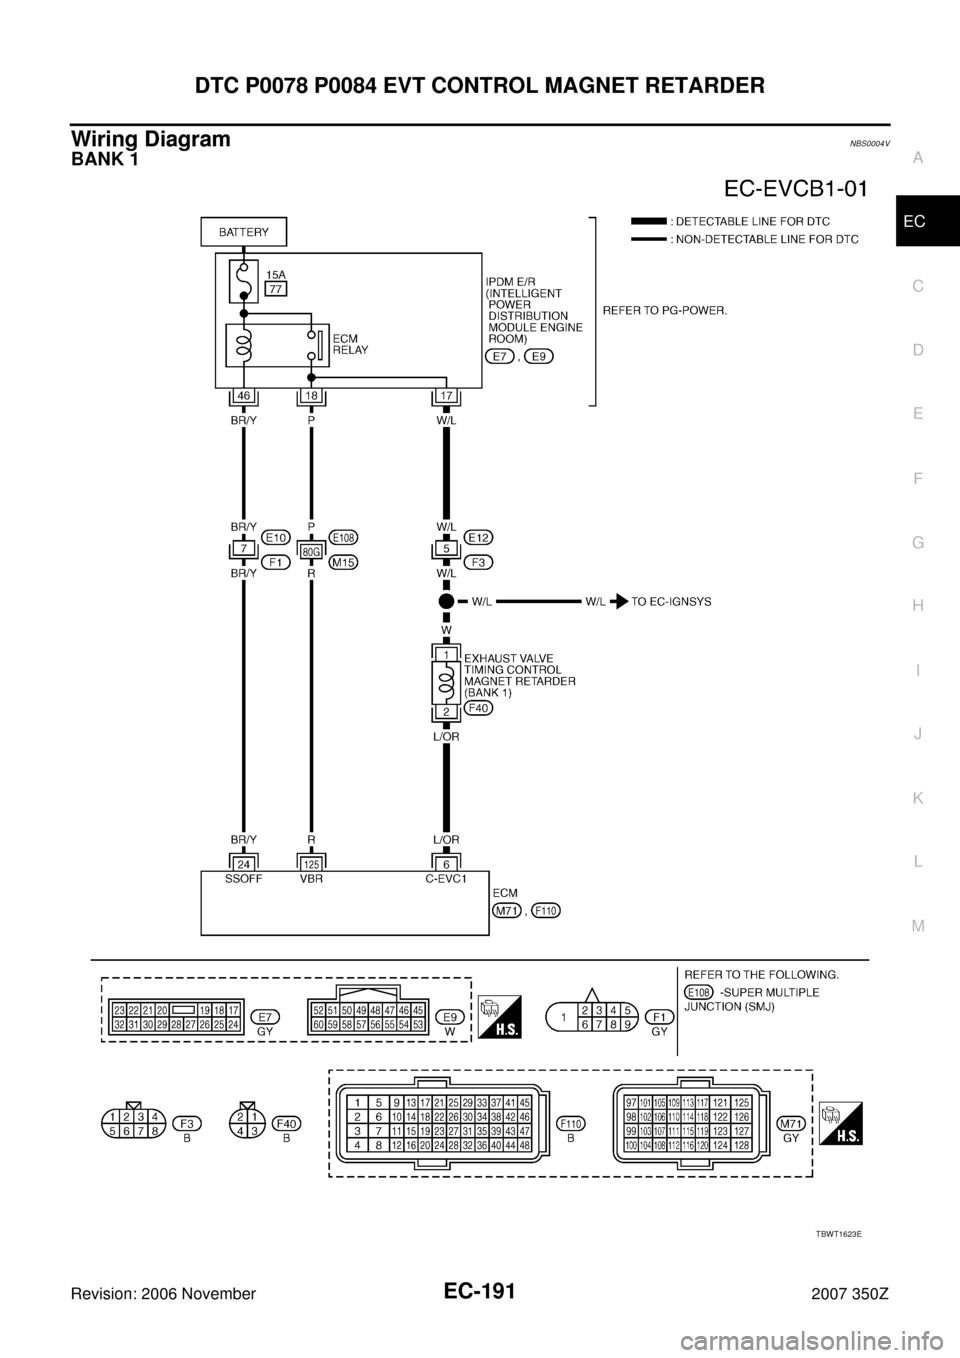 NISSAN 350Z 2007 Z33 Engine Control Workshop Manual DTC P0078 P0084 EVT CONTROL MAGNET RETARDER
EC-191
C
D
E
F
G
H
I
J
K
L
MA
EC
Revision: 2006 November2007 350Z
Wiring DiagramNBS0004V
BANK 1
TBWT1623E 